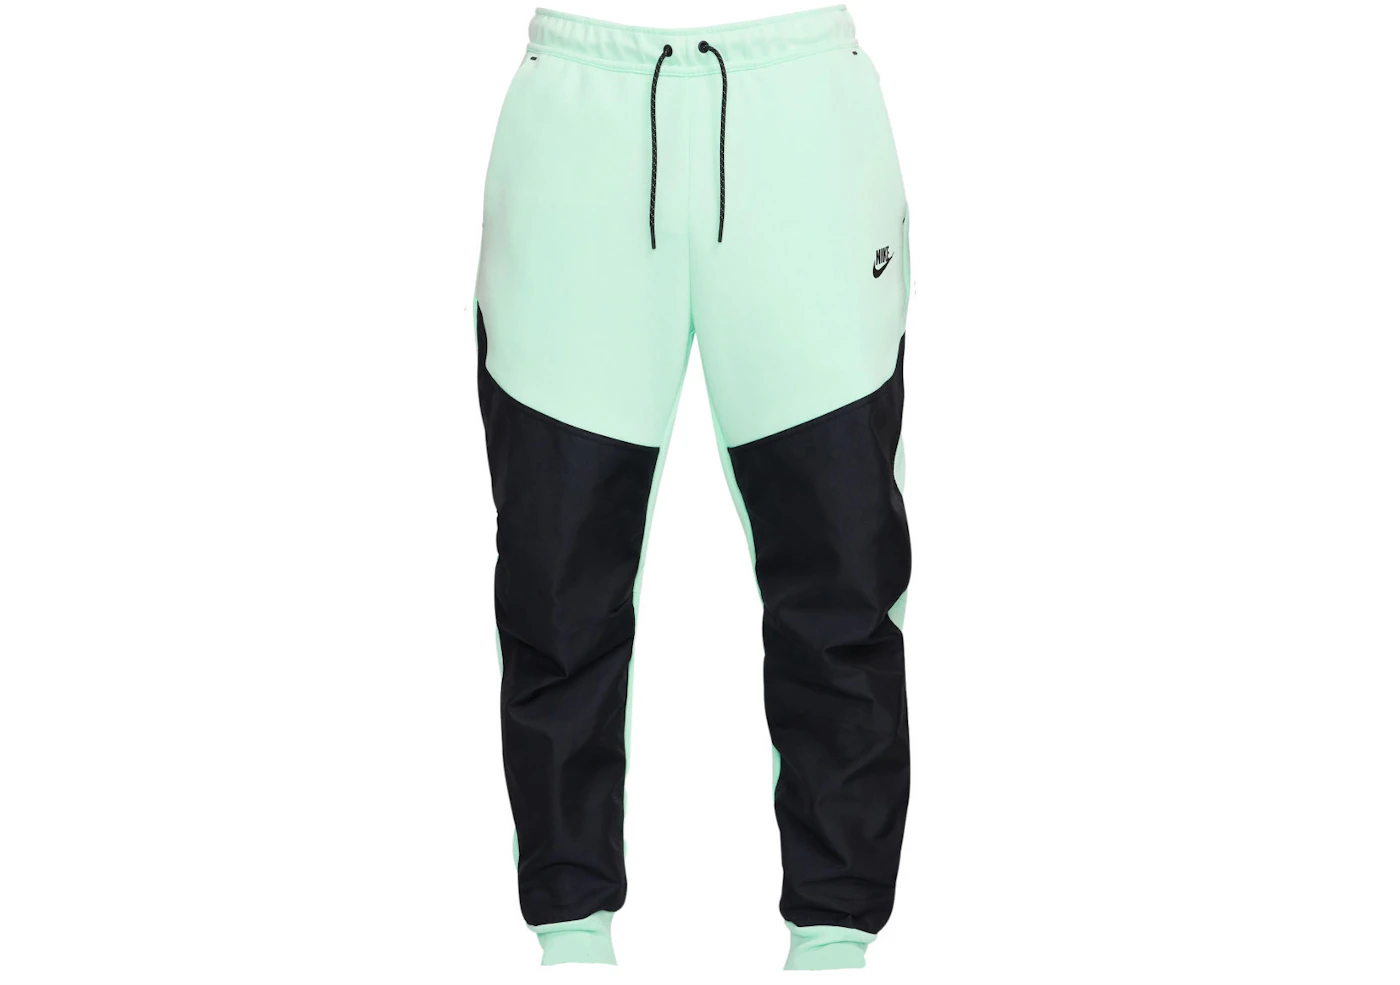 https://images.stockx.com/images/Nike-Sportswear-Tech-Fleece-Sweatpants-Mint-Green-Black.jpg?fit=fill&bg=FFFFFF&w=700&h=500&fm=webp&auto=compress&q=90&dpr=2&trim=color&updated_at=1687835876